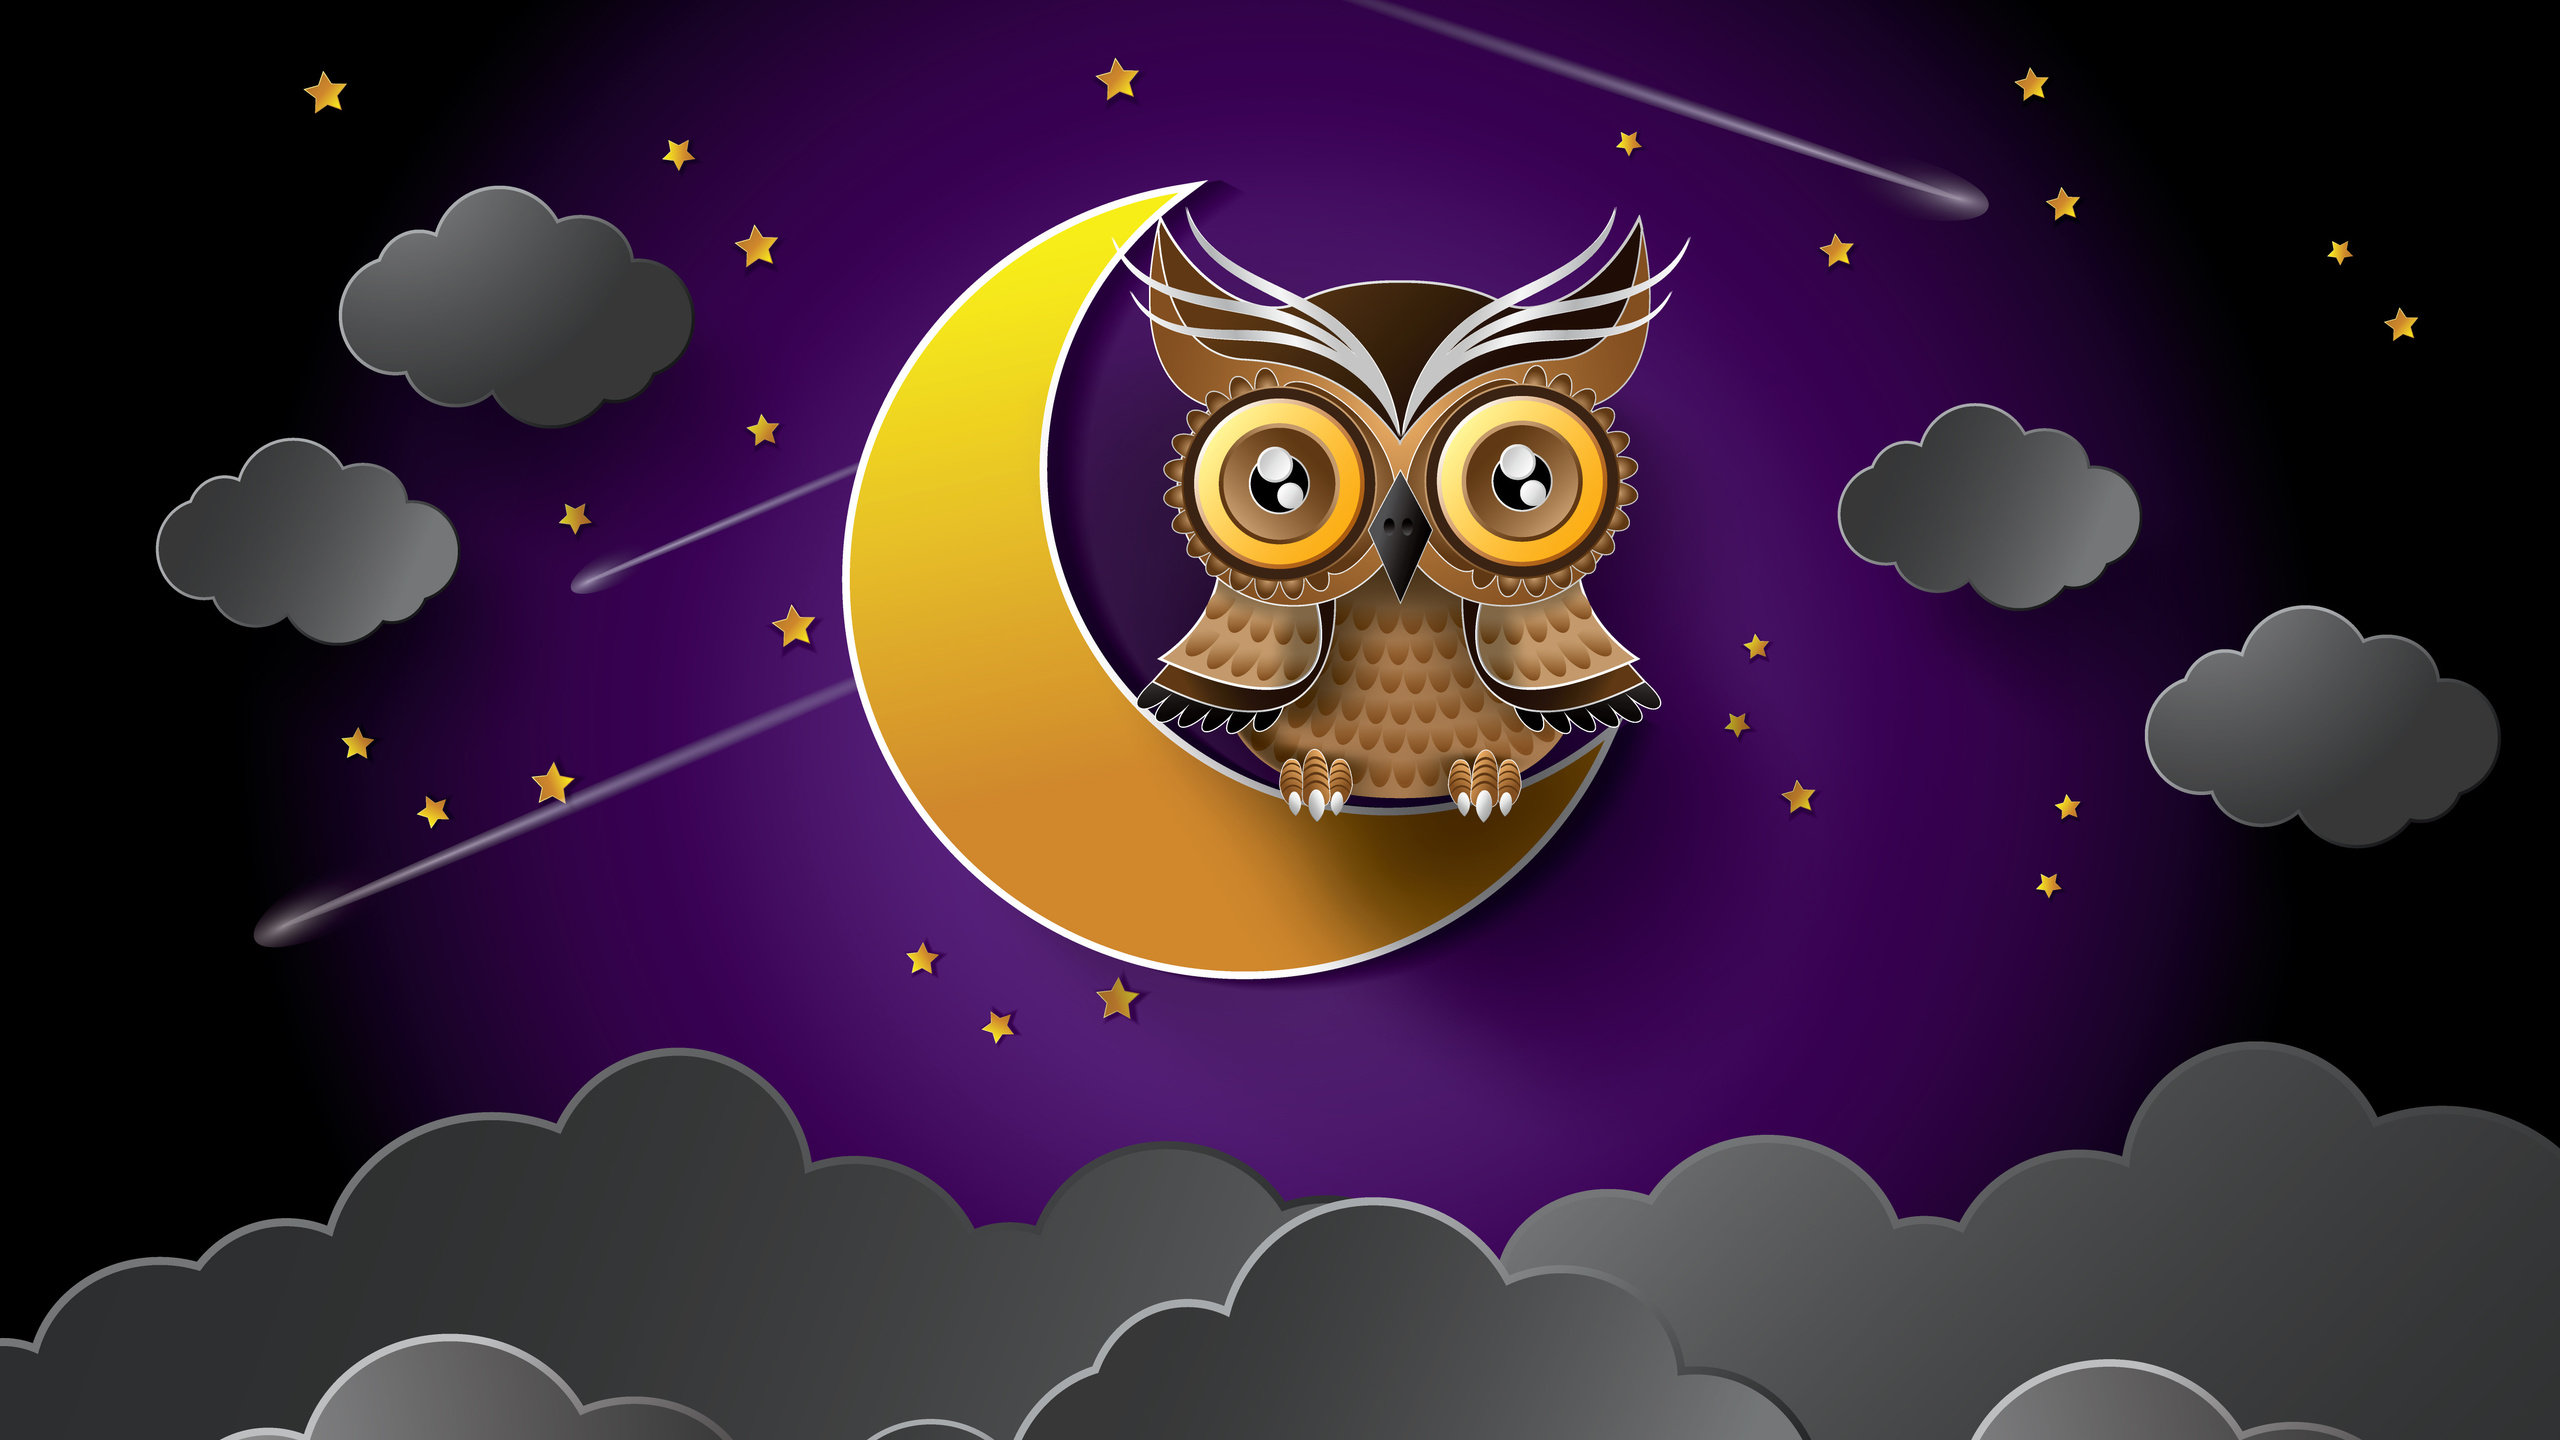 Free download Owl wallpaper ID:236959 hd 2560x1440 for desktop